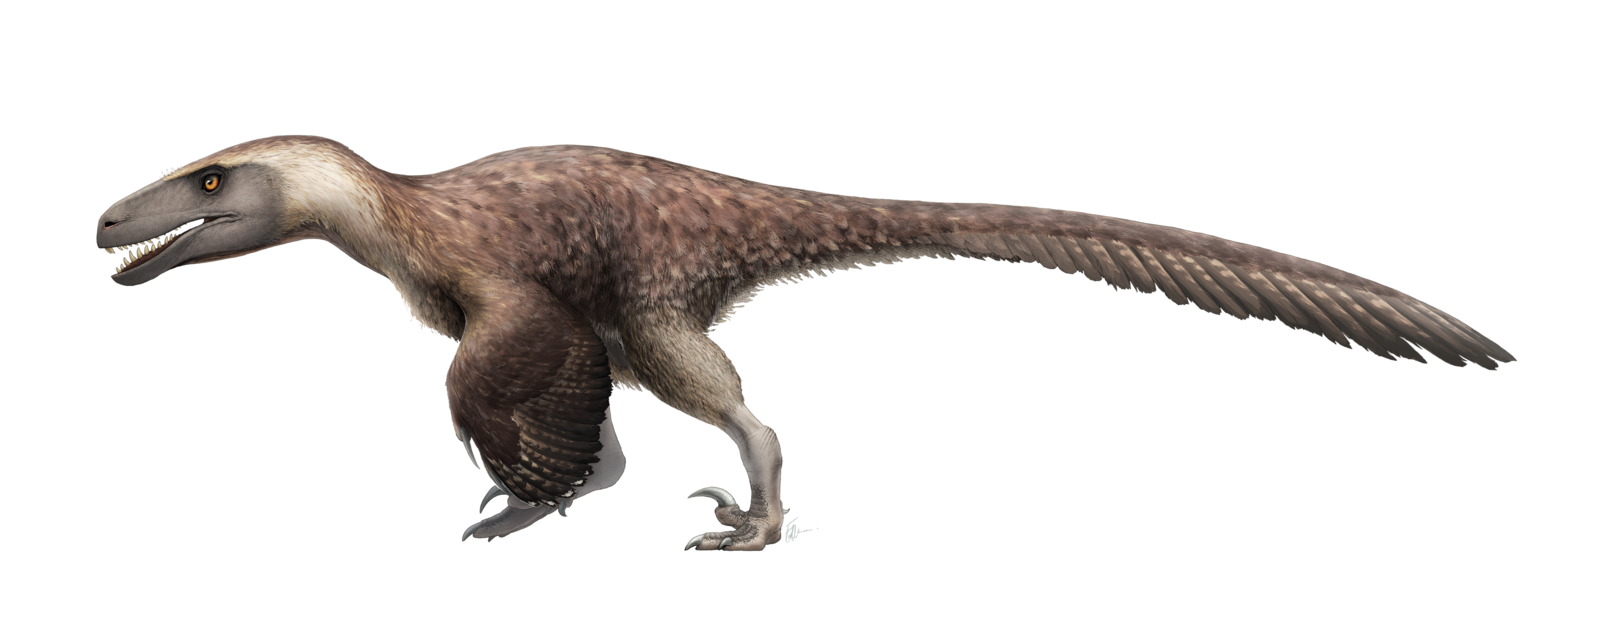 Deinonychus, Dinopedia